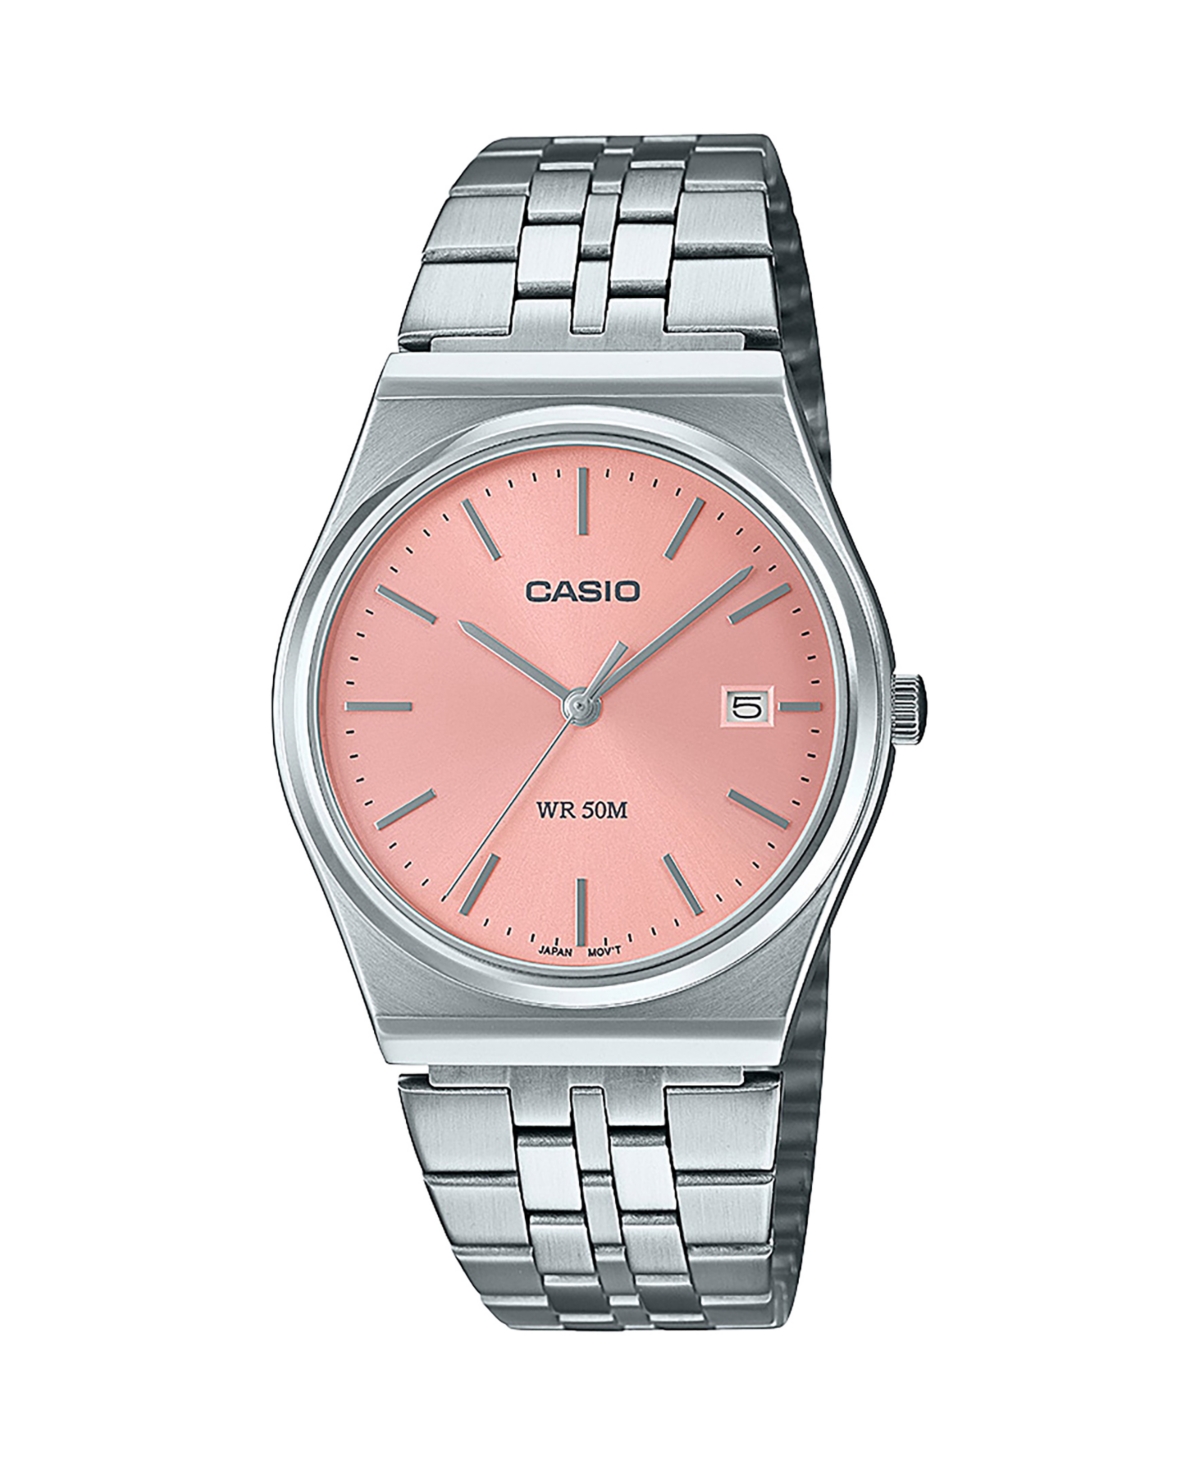 G-shock Casio Men's Analog Silver-tone Stainless Steel Watch, 35mm, Mtpb145d-4vt